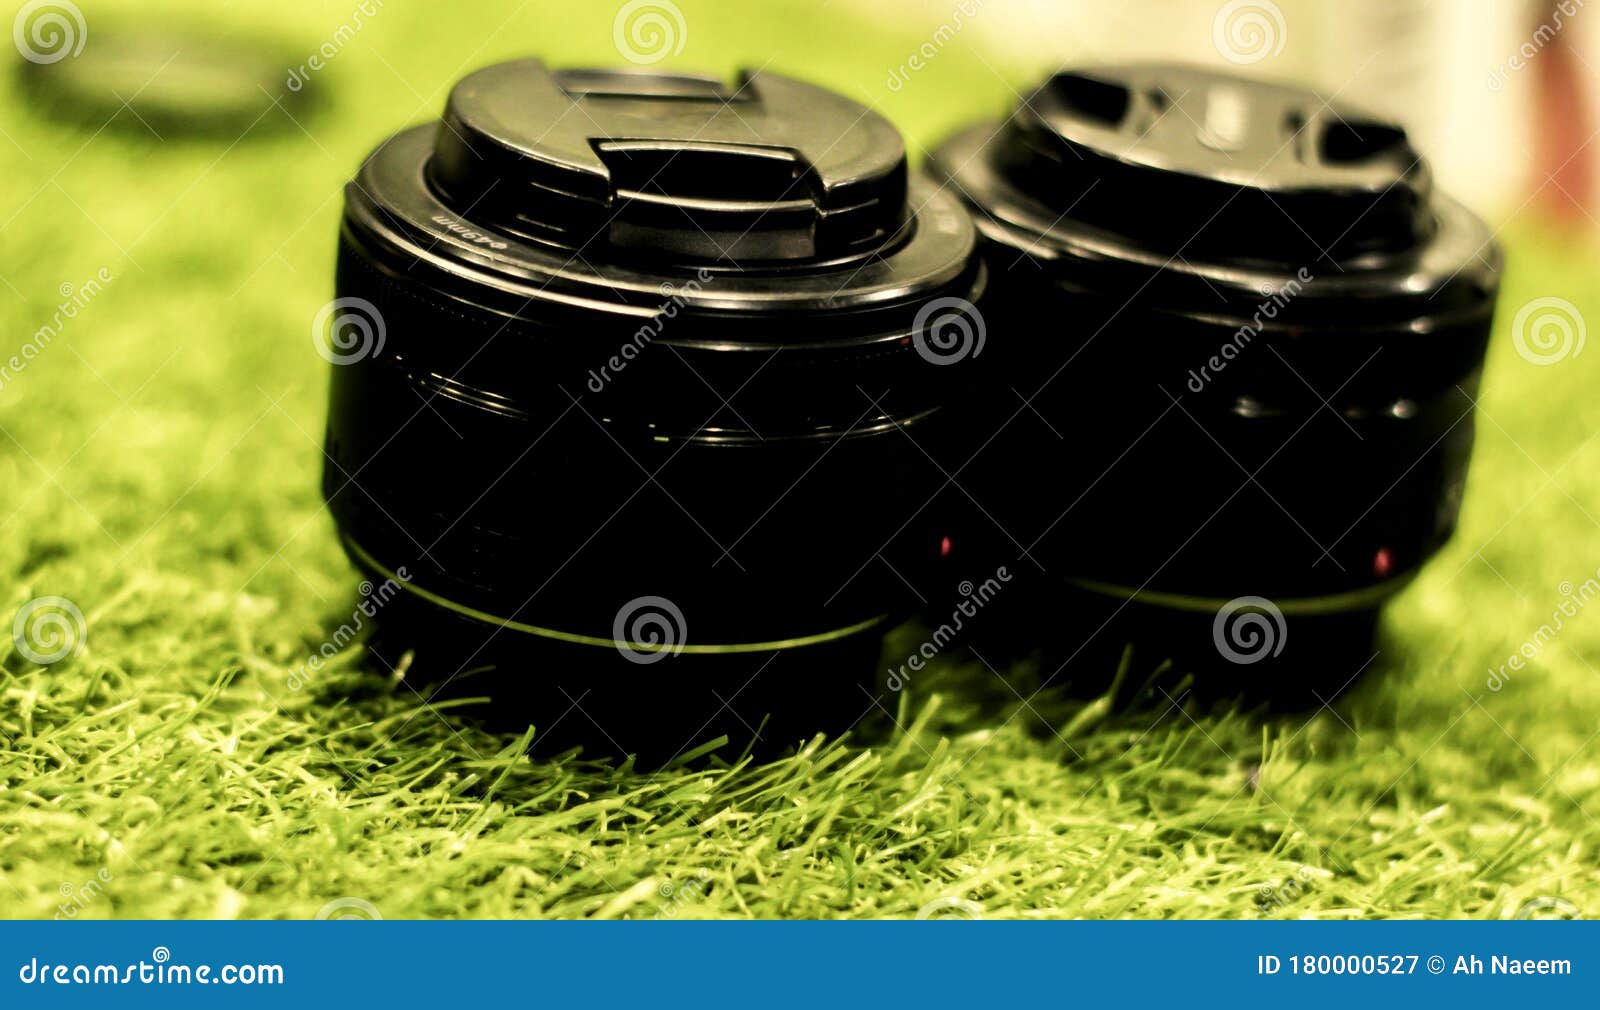 dslr prime lens on grassy background .selective focus blurry background